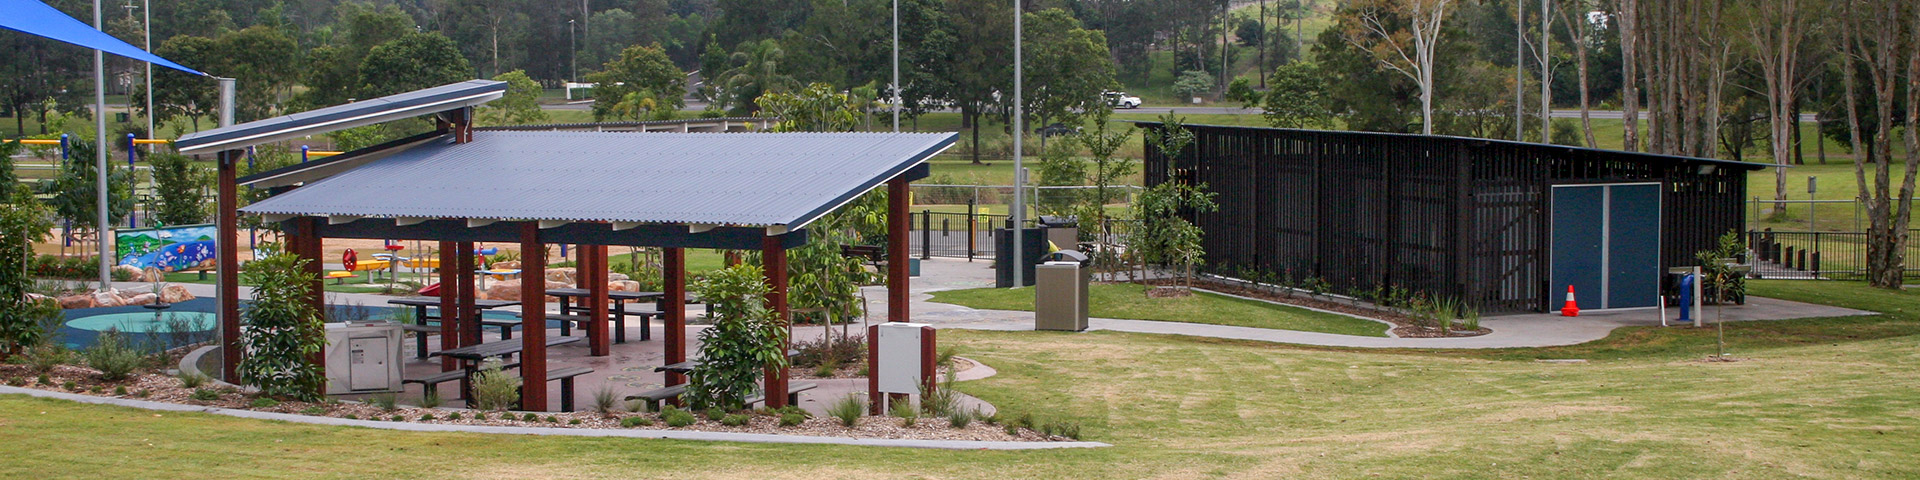 Four Sided park shelter design